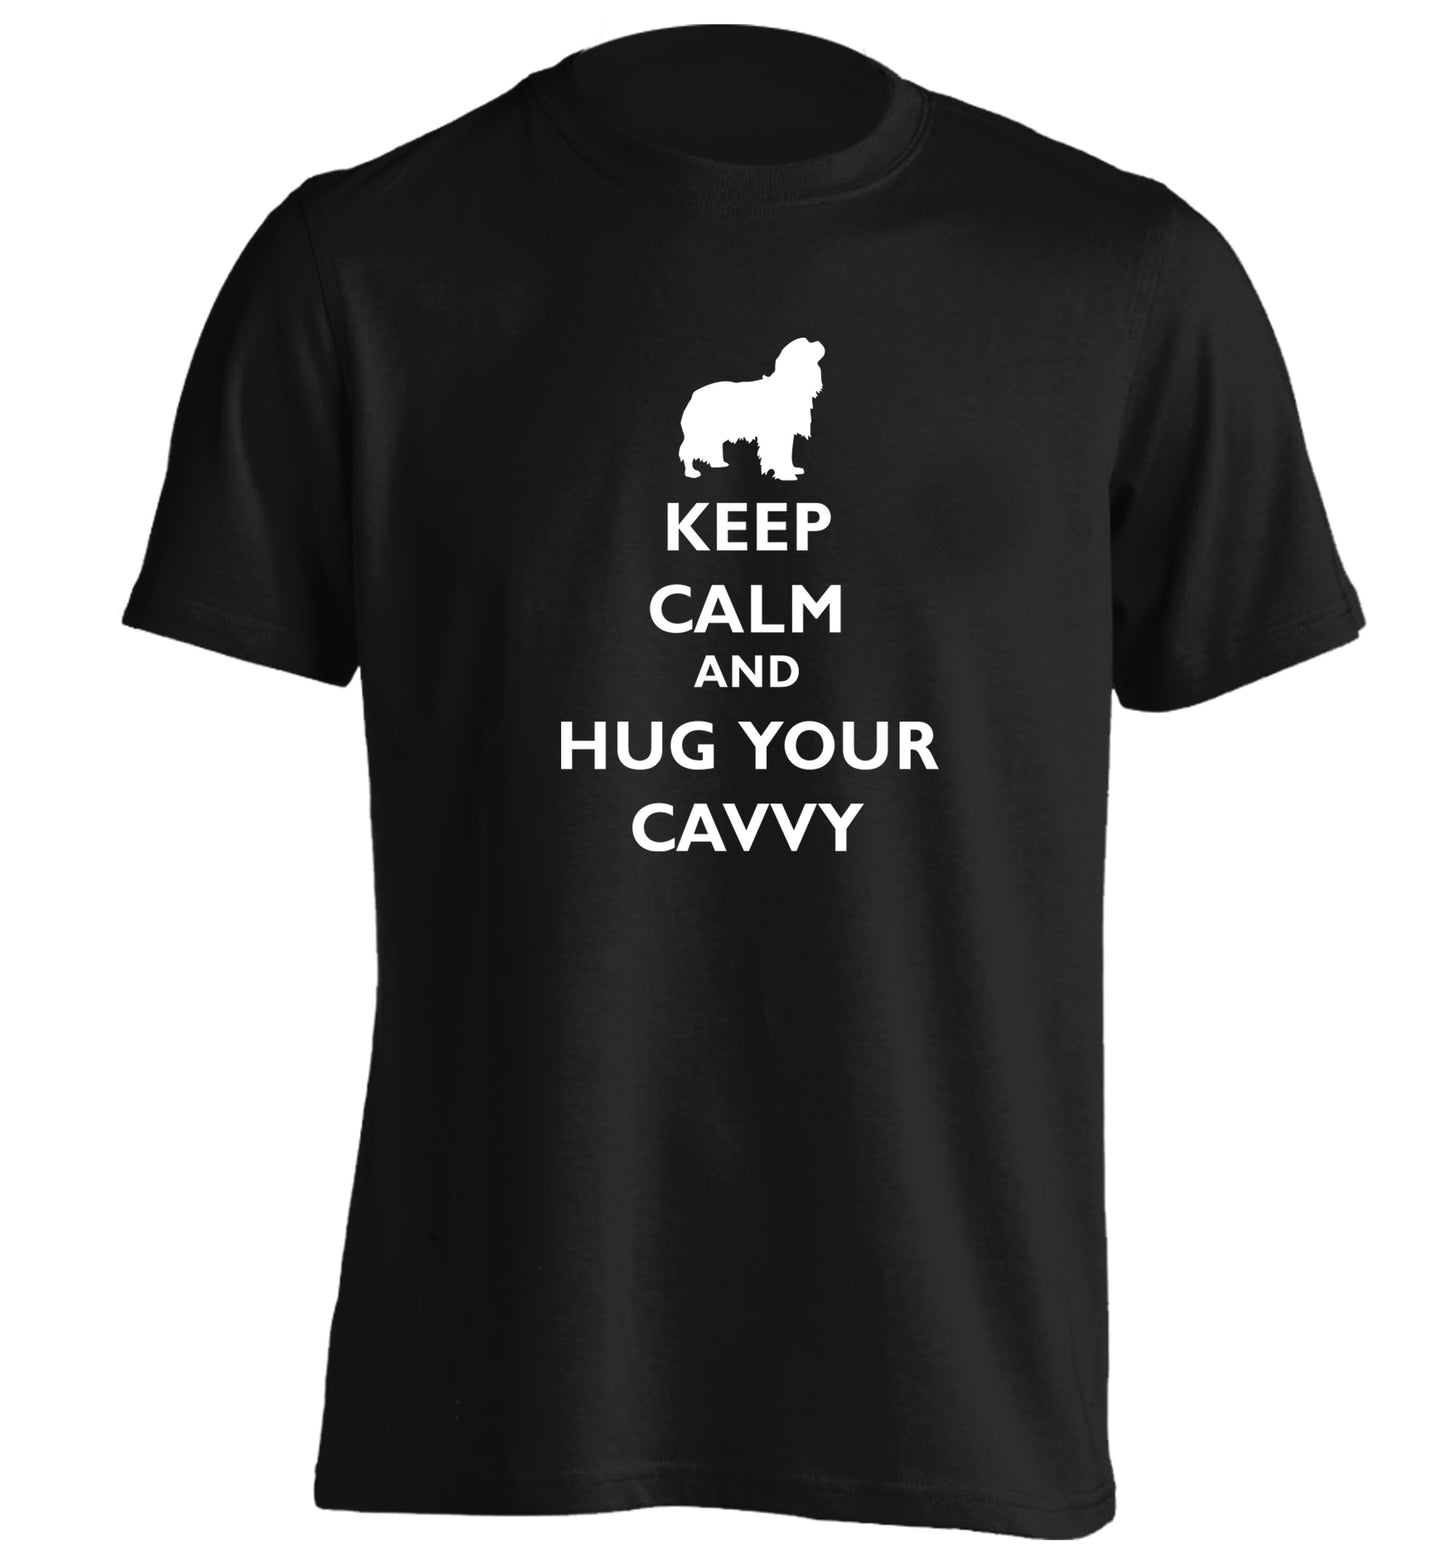 Keep calm and hug your cavvy adults unisex black Tshirt 2XL